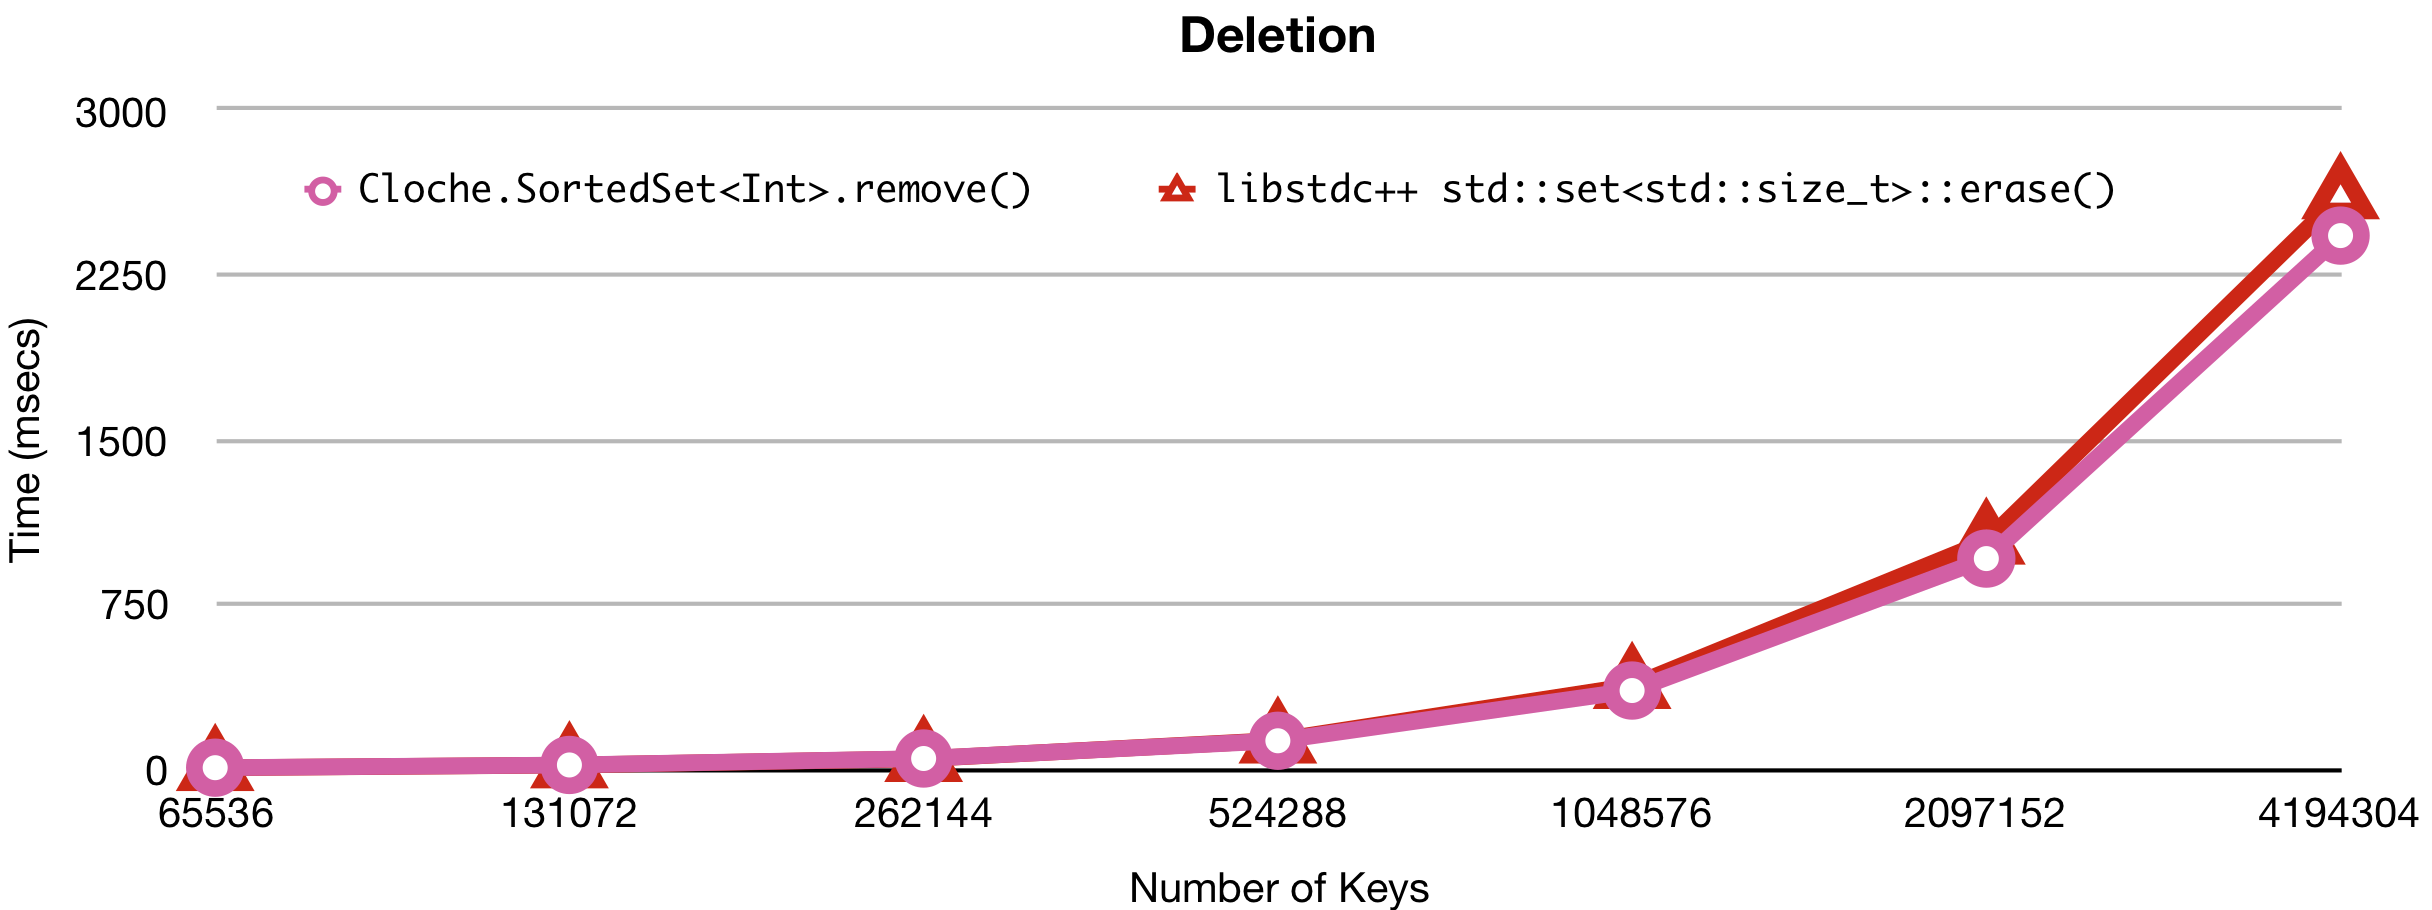 Deletion Performance Comparison under Ubuntu